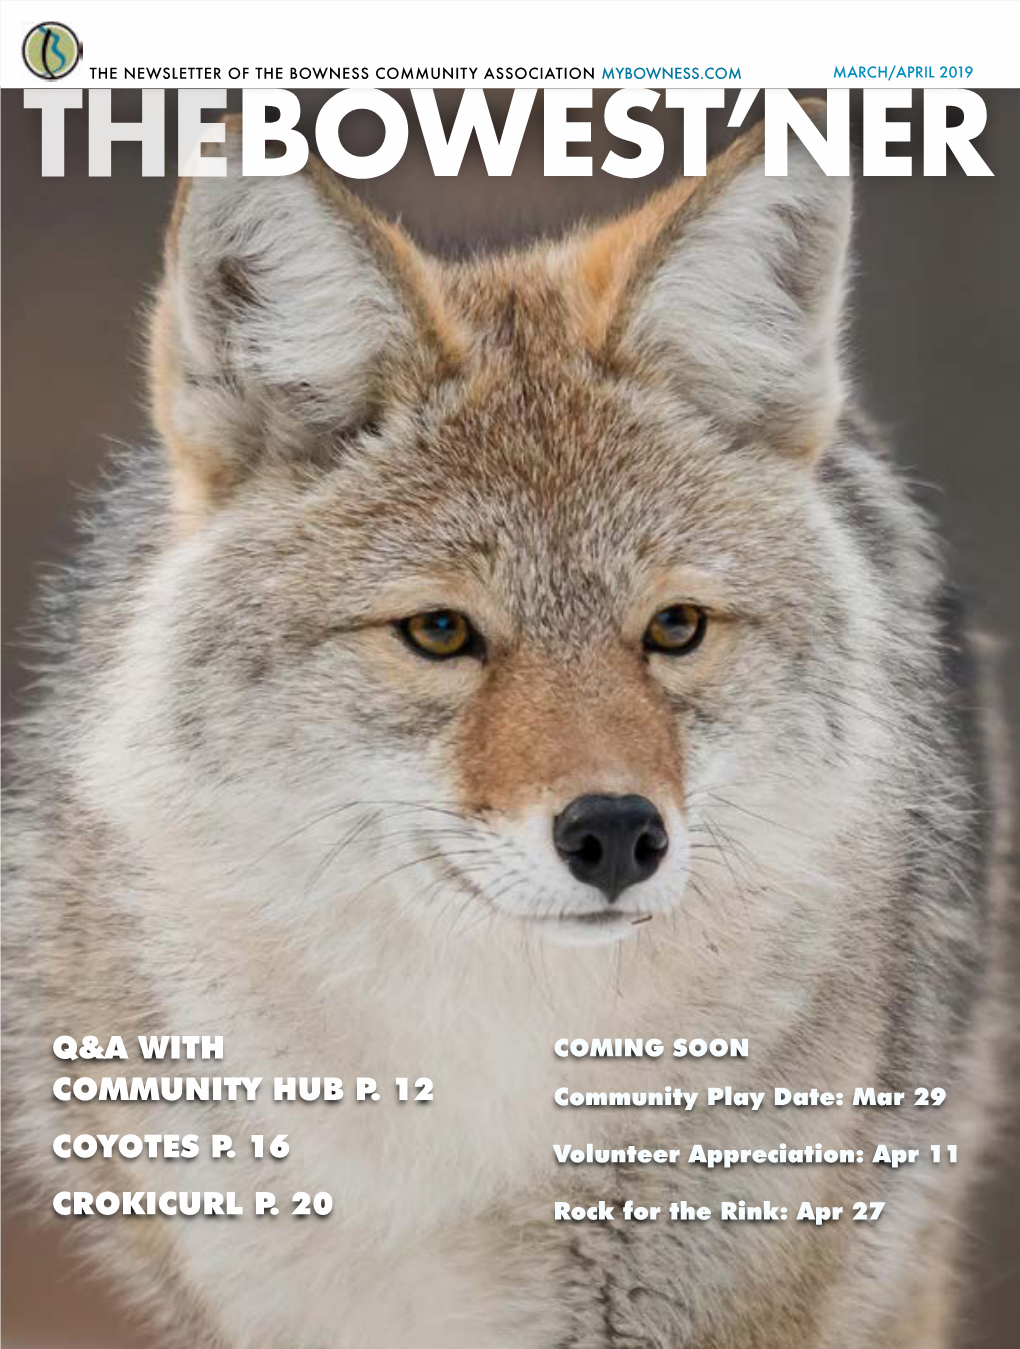 Q&A with Community Hub P. 12 Coyotes P. 16 Crokicurl P. 20